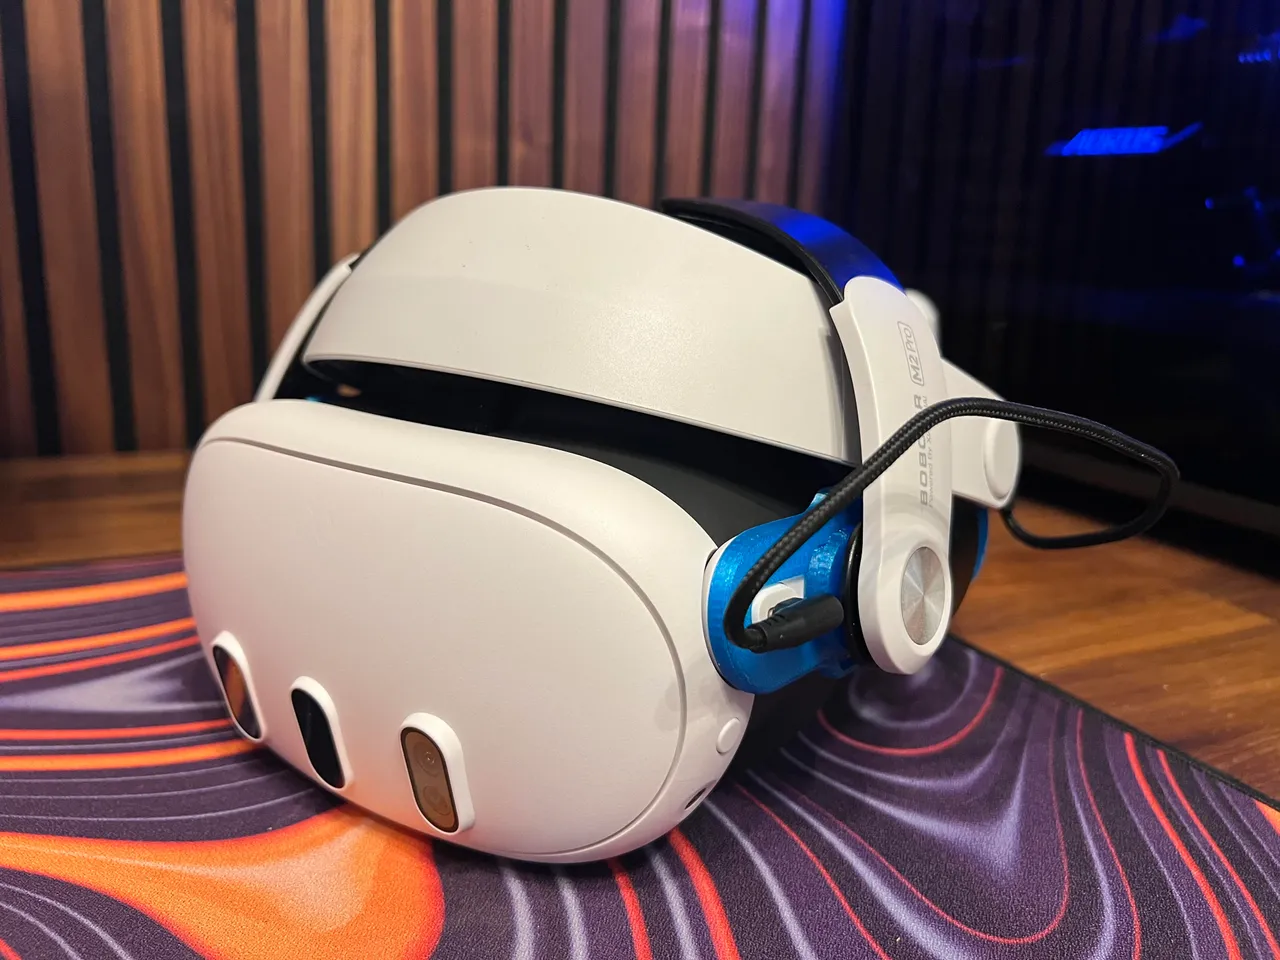 DIY bobovr quest 3 with Headphones : r/virtualreality